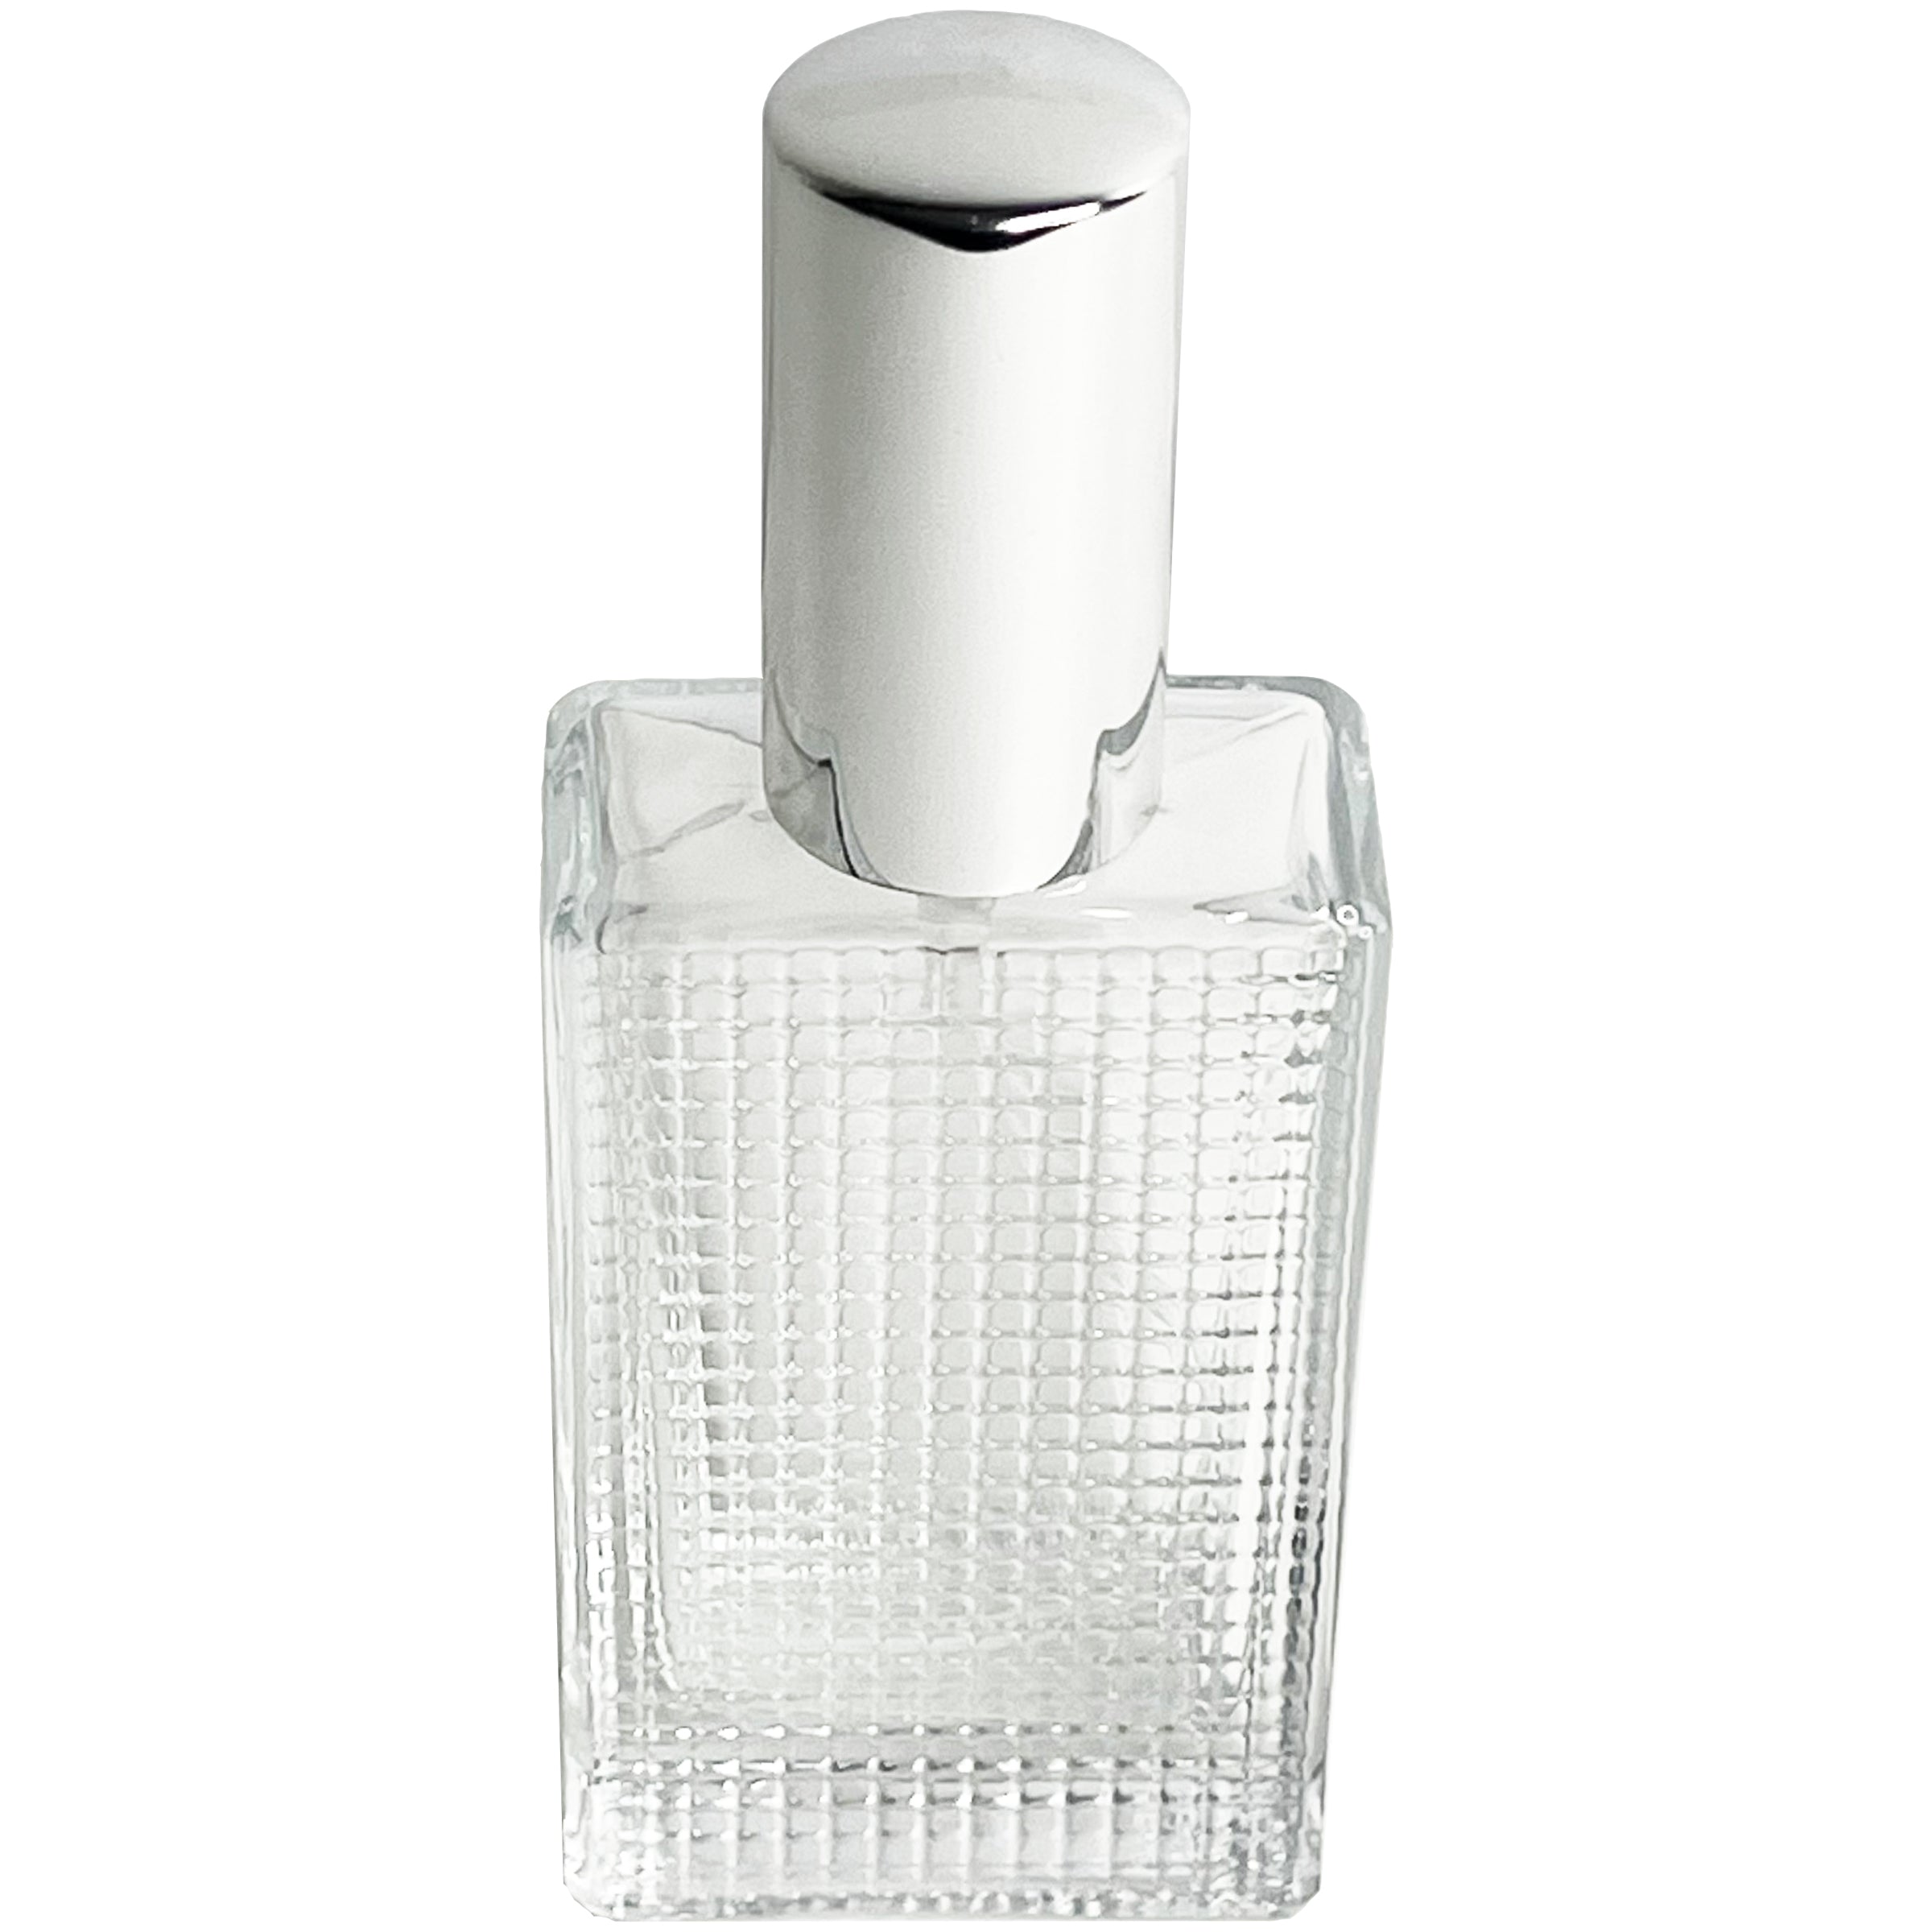 50ml 1.7oz grid glass perfume spray bottles